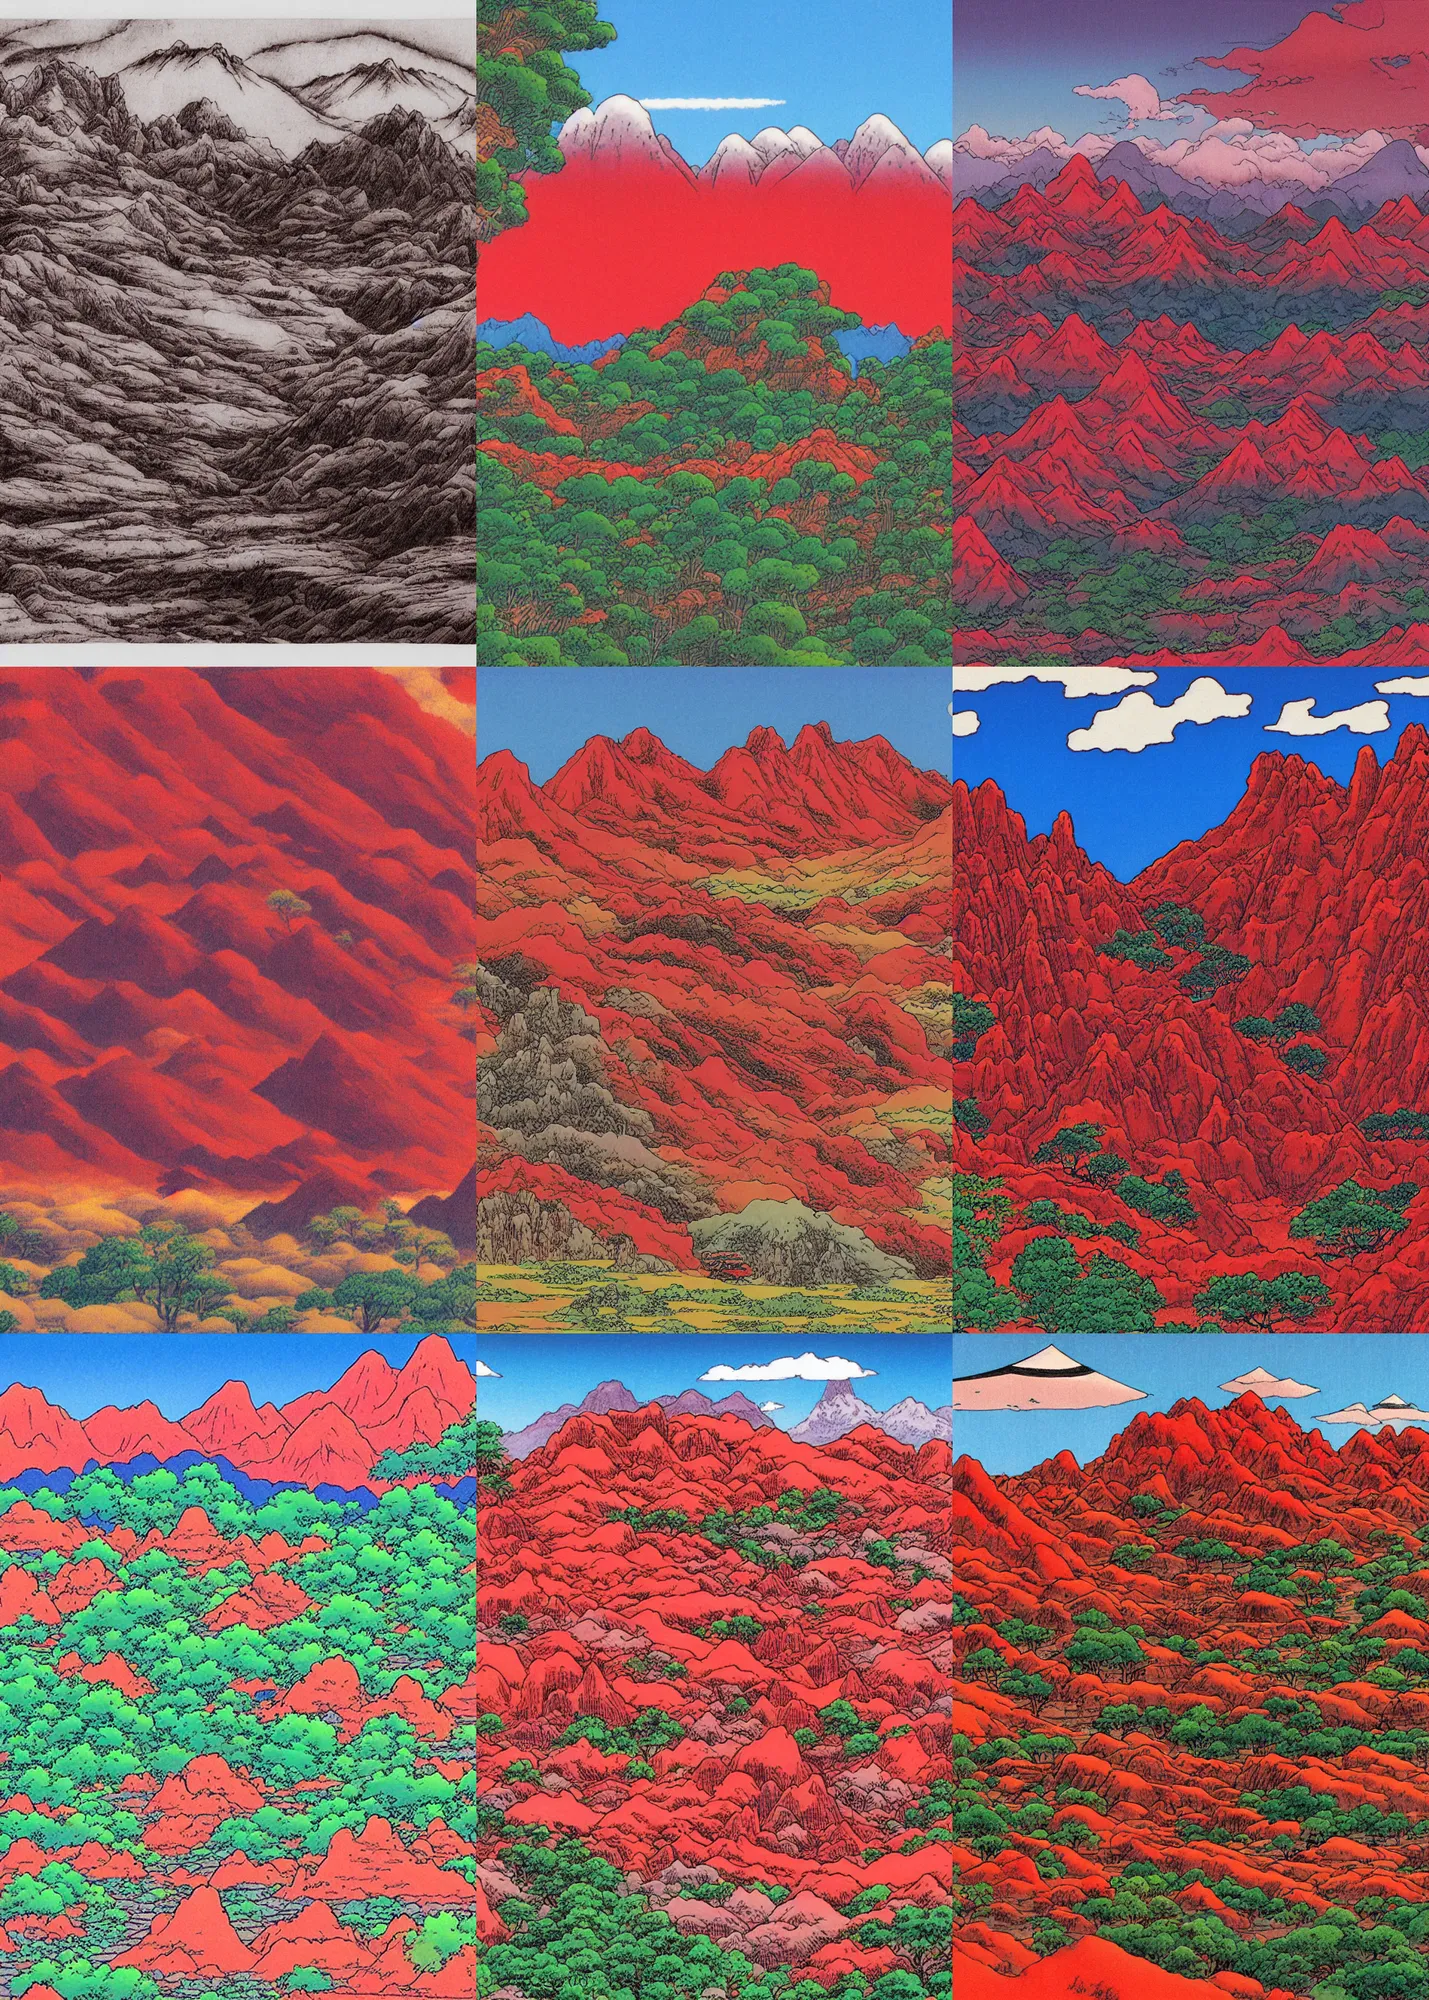 Prompt: landscape wih red mountains, by akira toriyama